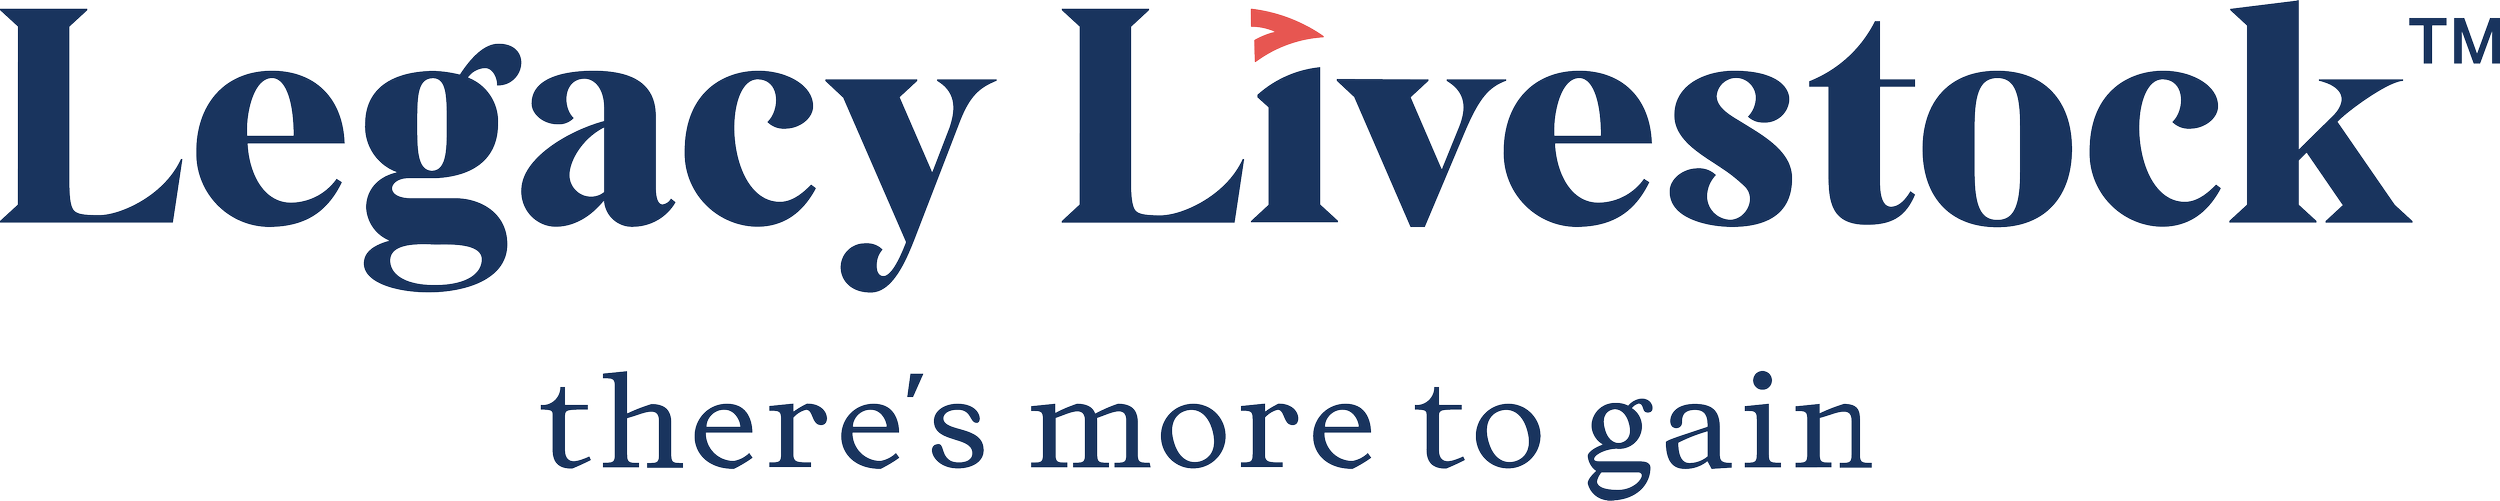 Legacy-Livestock-Logo_positive.png